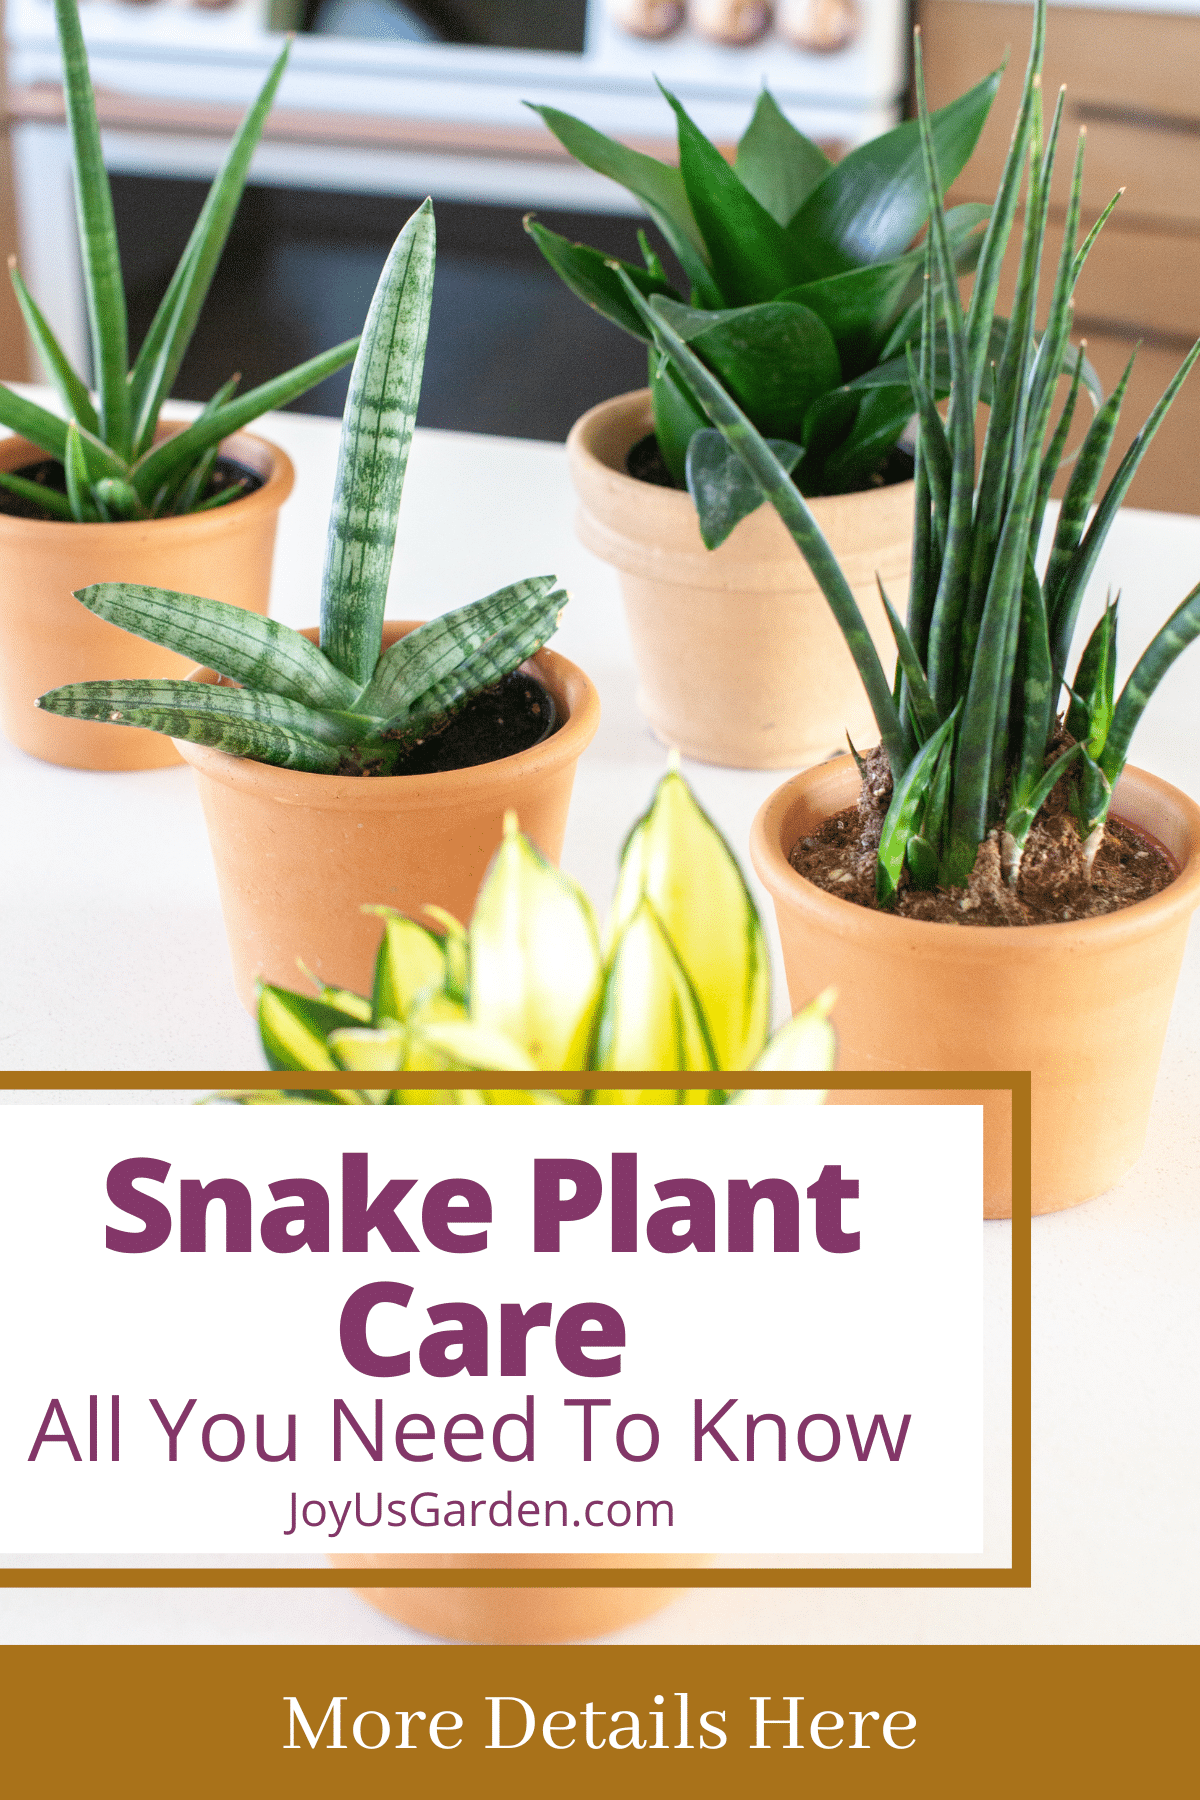 A tall dark green snake plant sansevieria grows in a gold urn pot